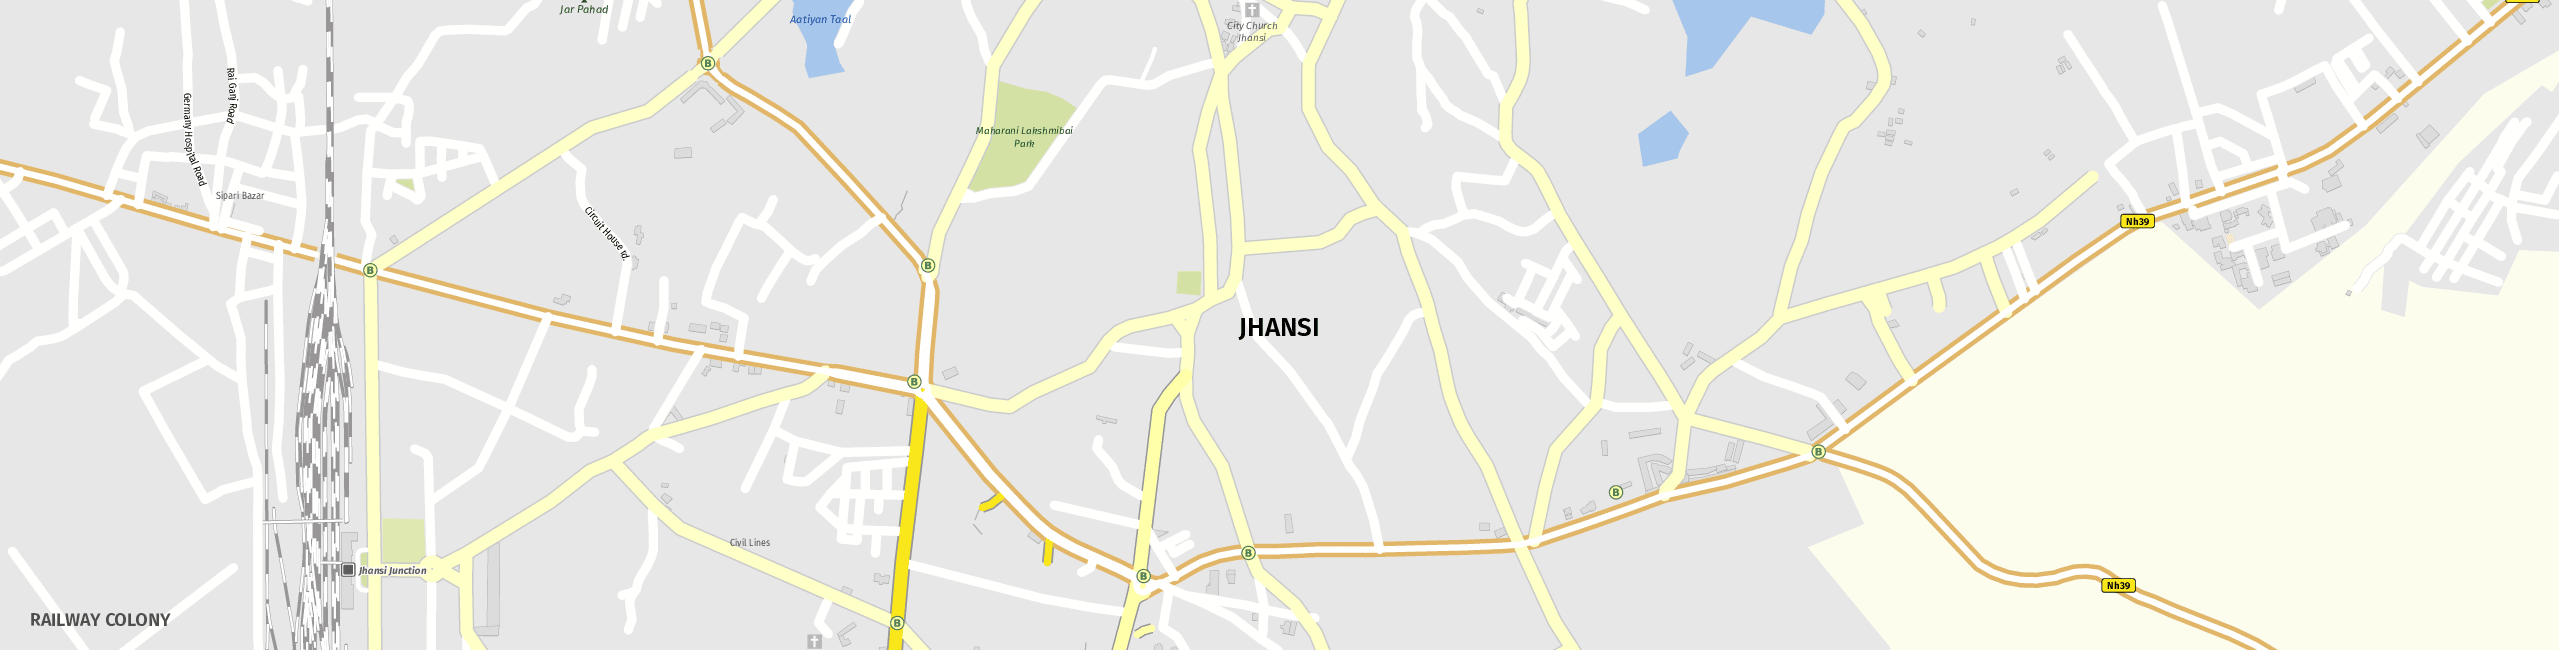 Stadtplan Jhansi zum Downloaden.